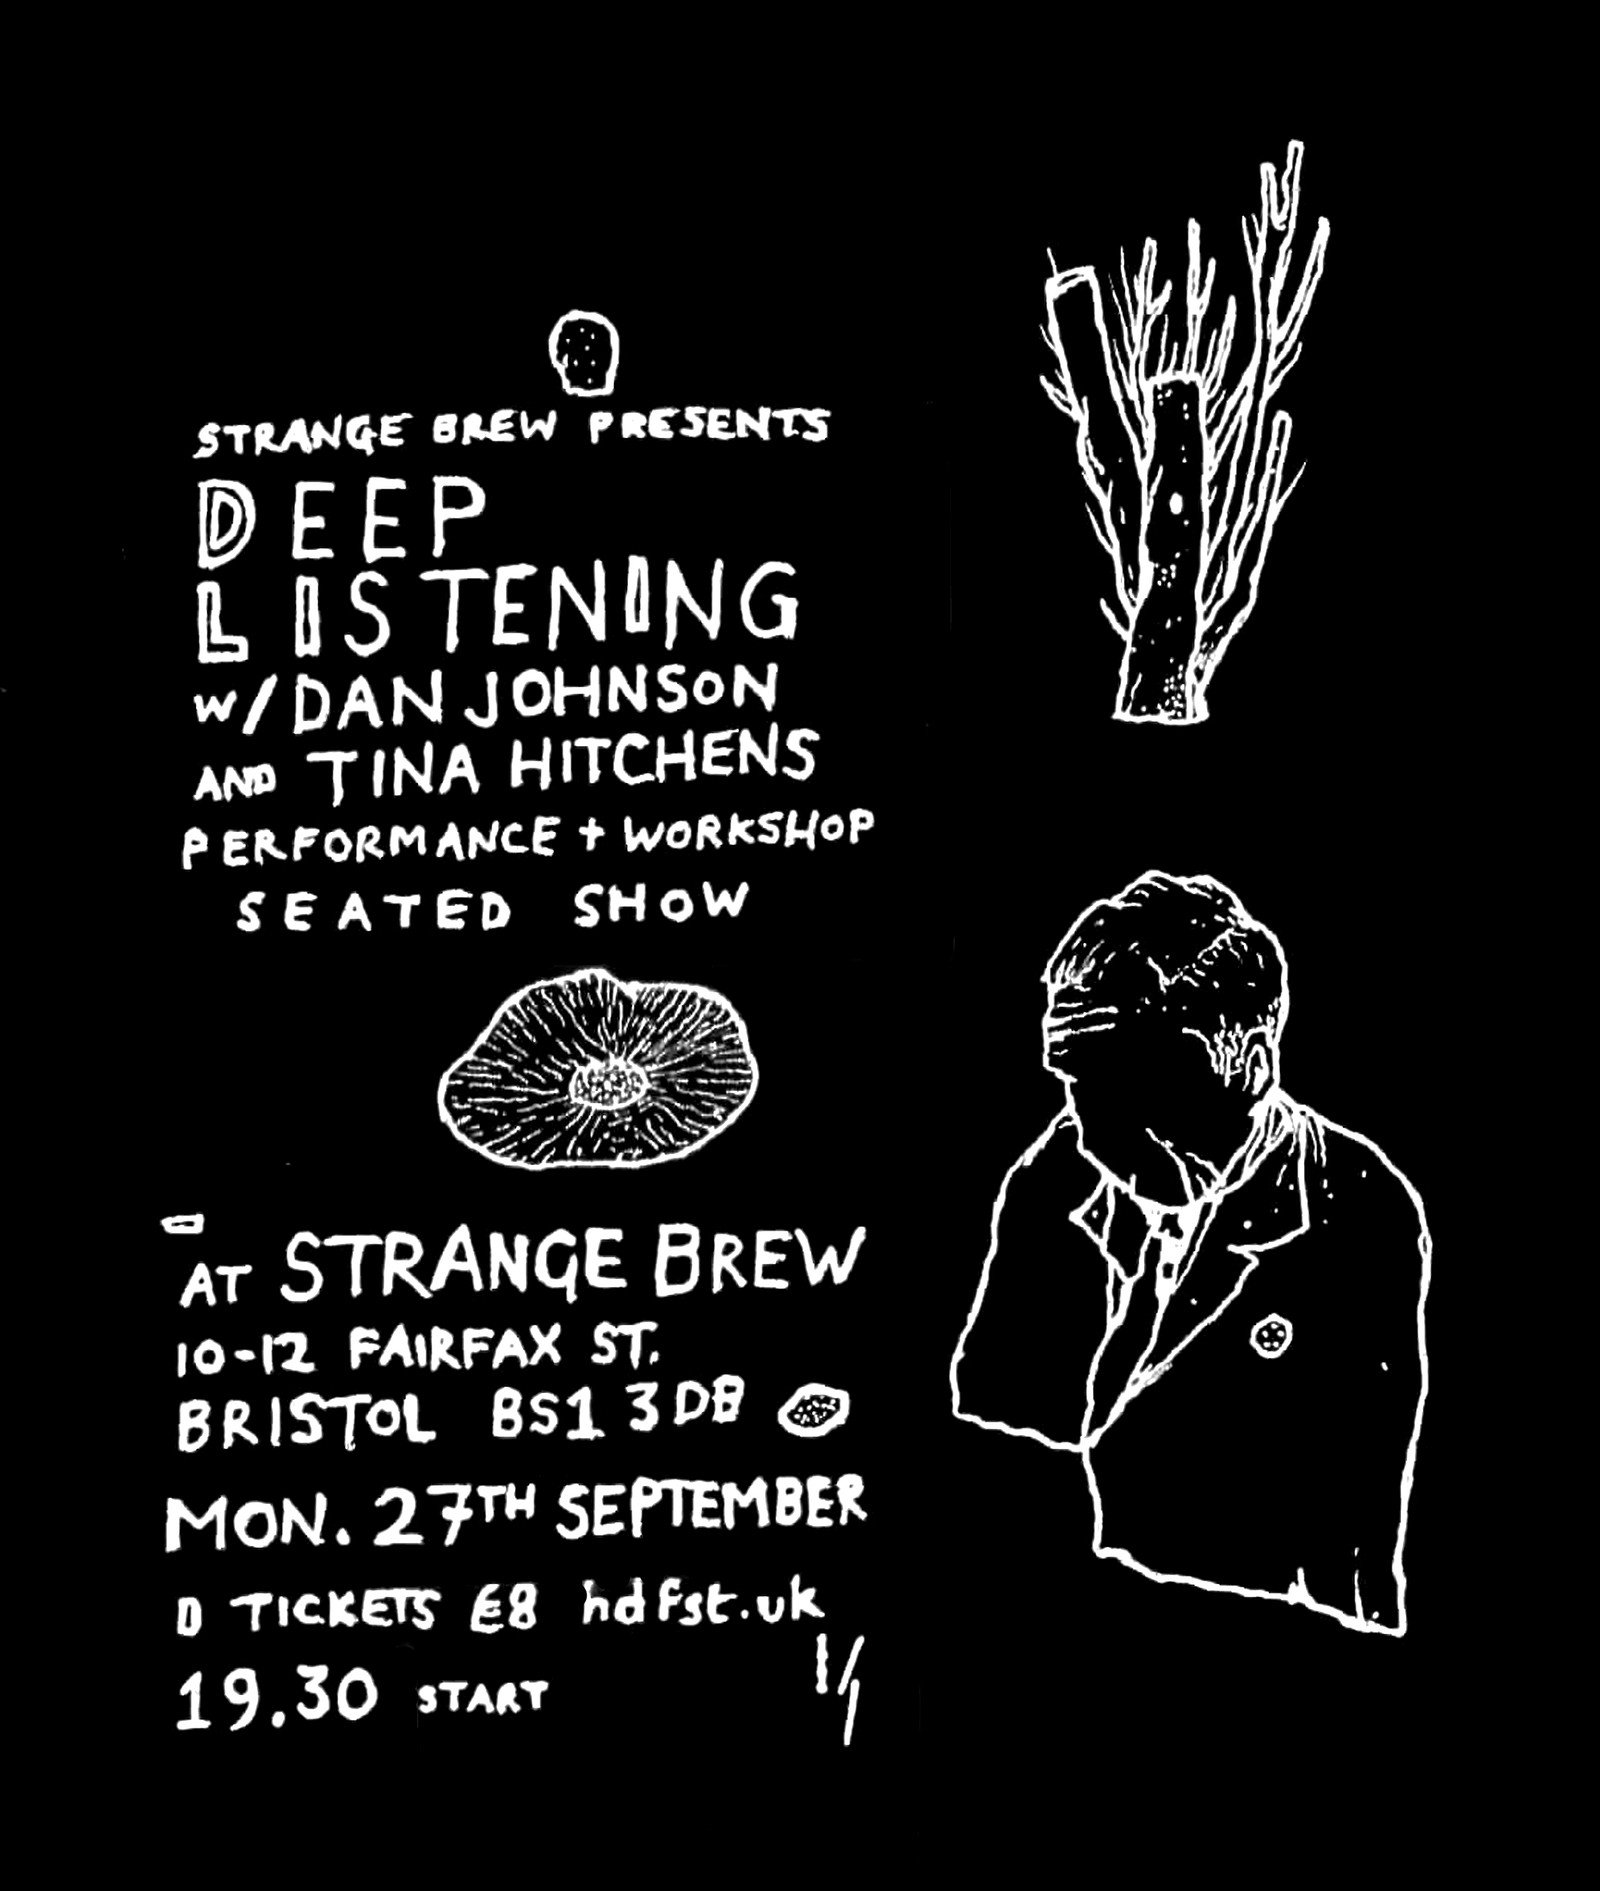 Deep Listening with Dan Johnson & Tina Hitchens at Strange Brew